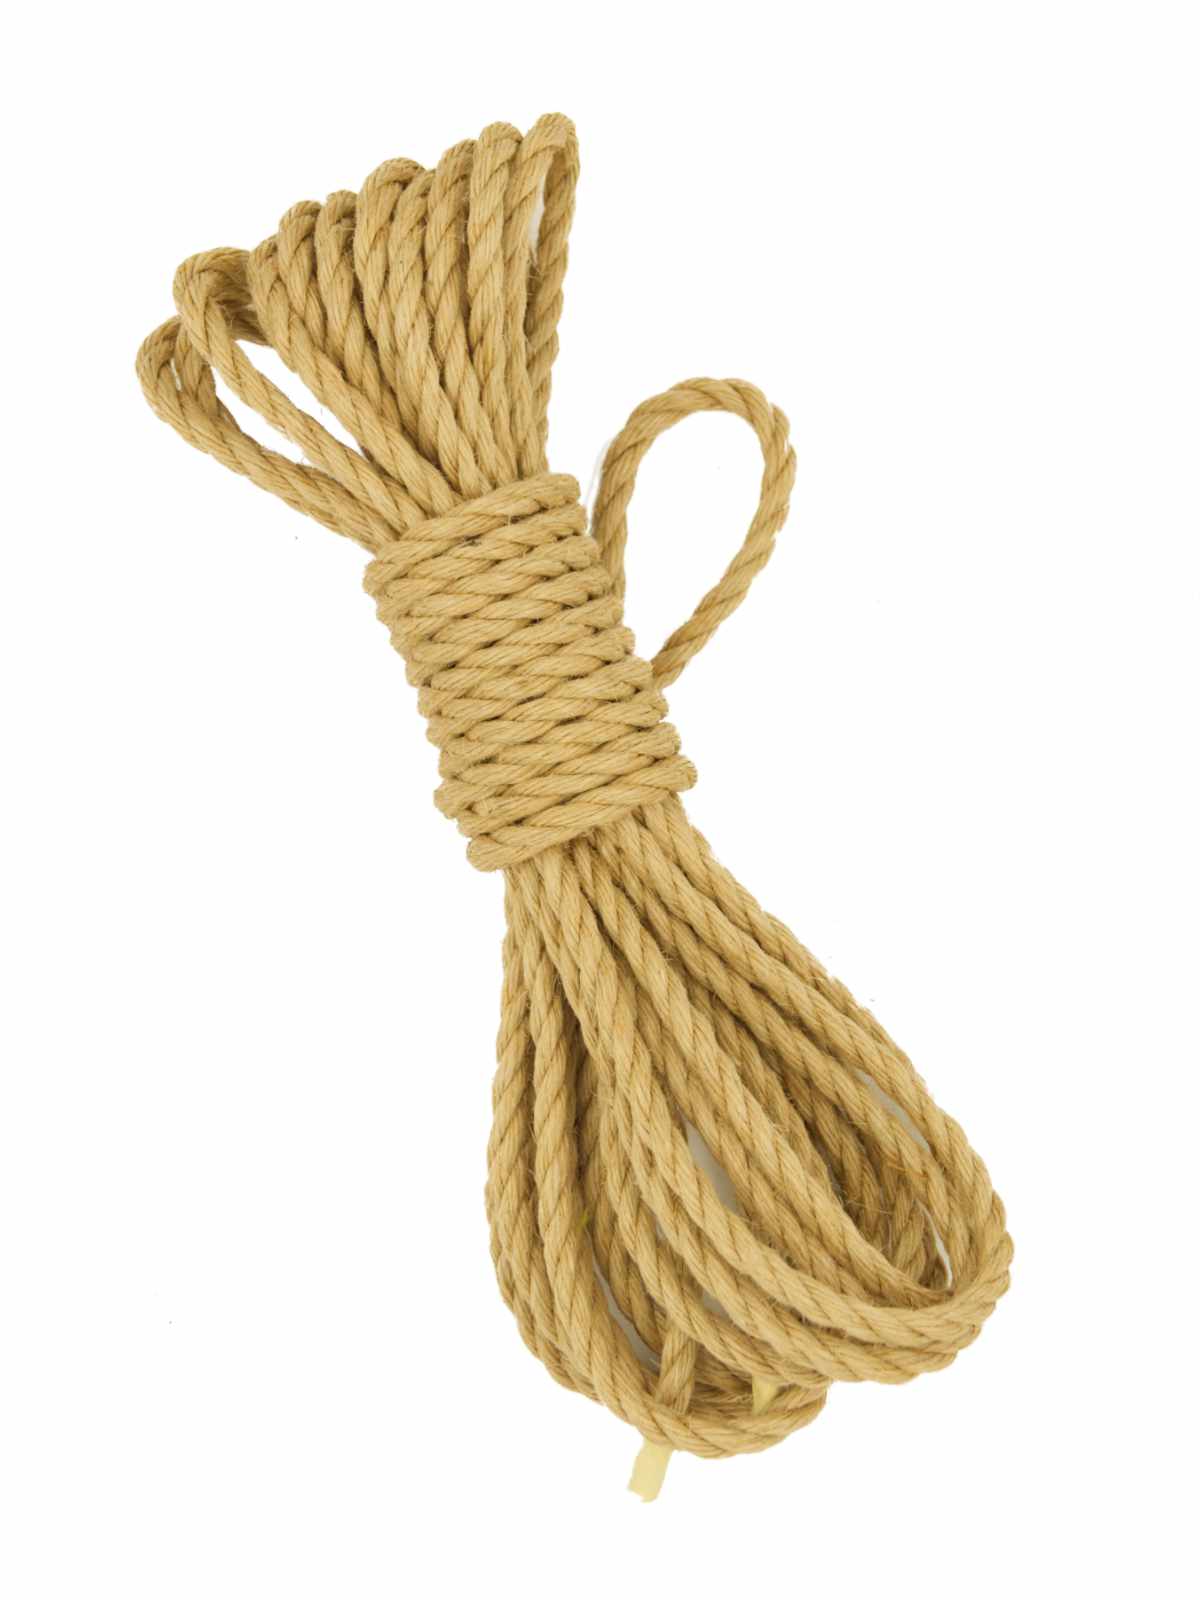 ø 6mm RAW Jouyoku jute rope for Shibari, Kinbaku bondage, various lengths